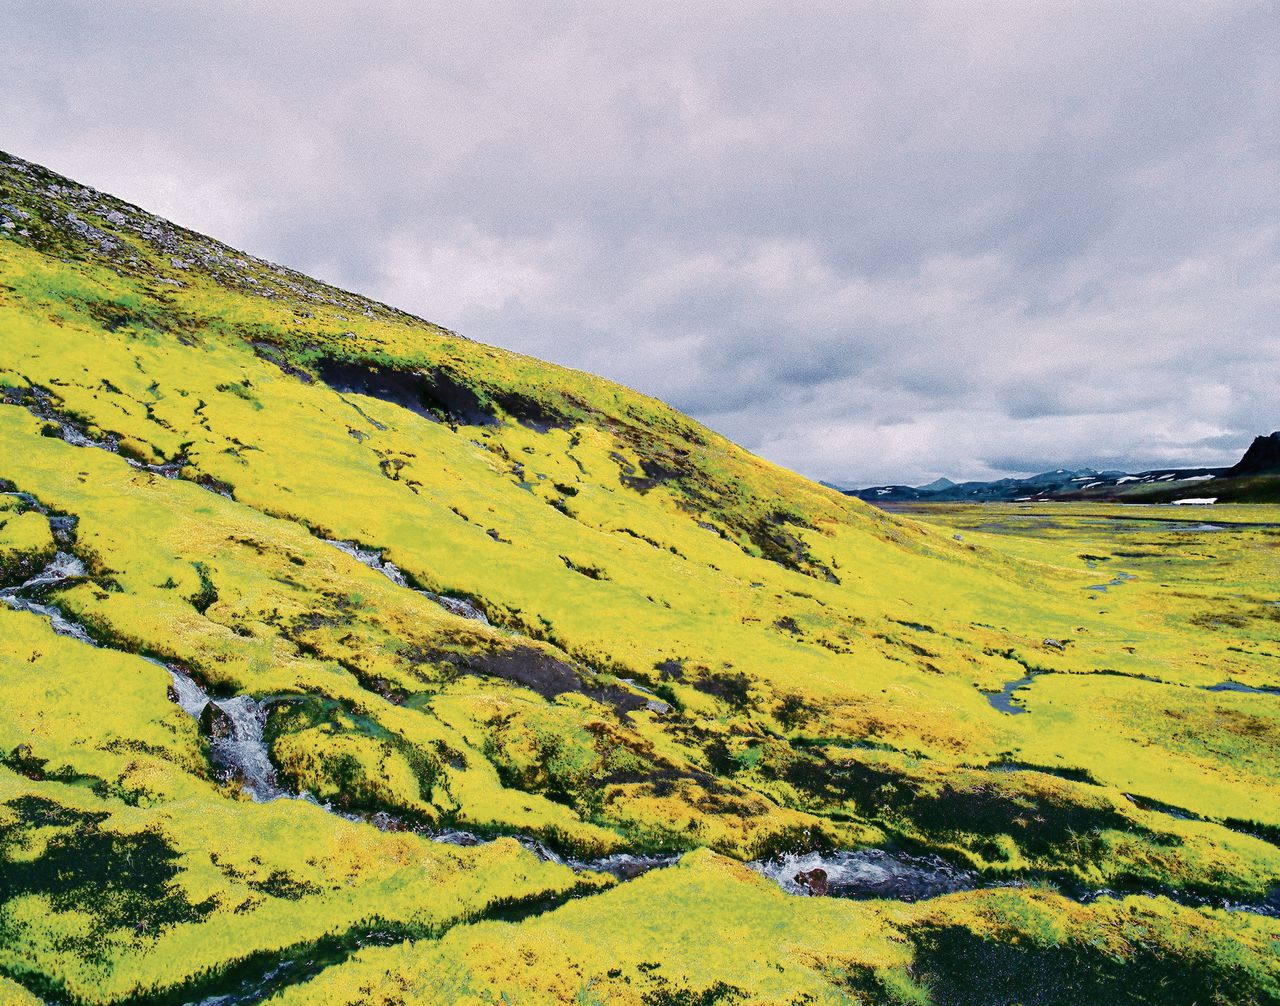 Langisjór 2, Unwired Landscapes63°58’11”N 18°41’6”WRoad F235, Vatnajökulsþjóðgarður, Iceland. Zomer, 17 augustus 2015